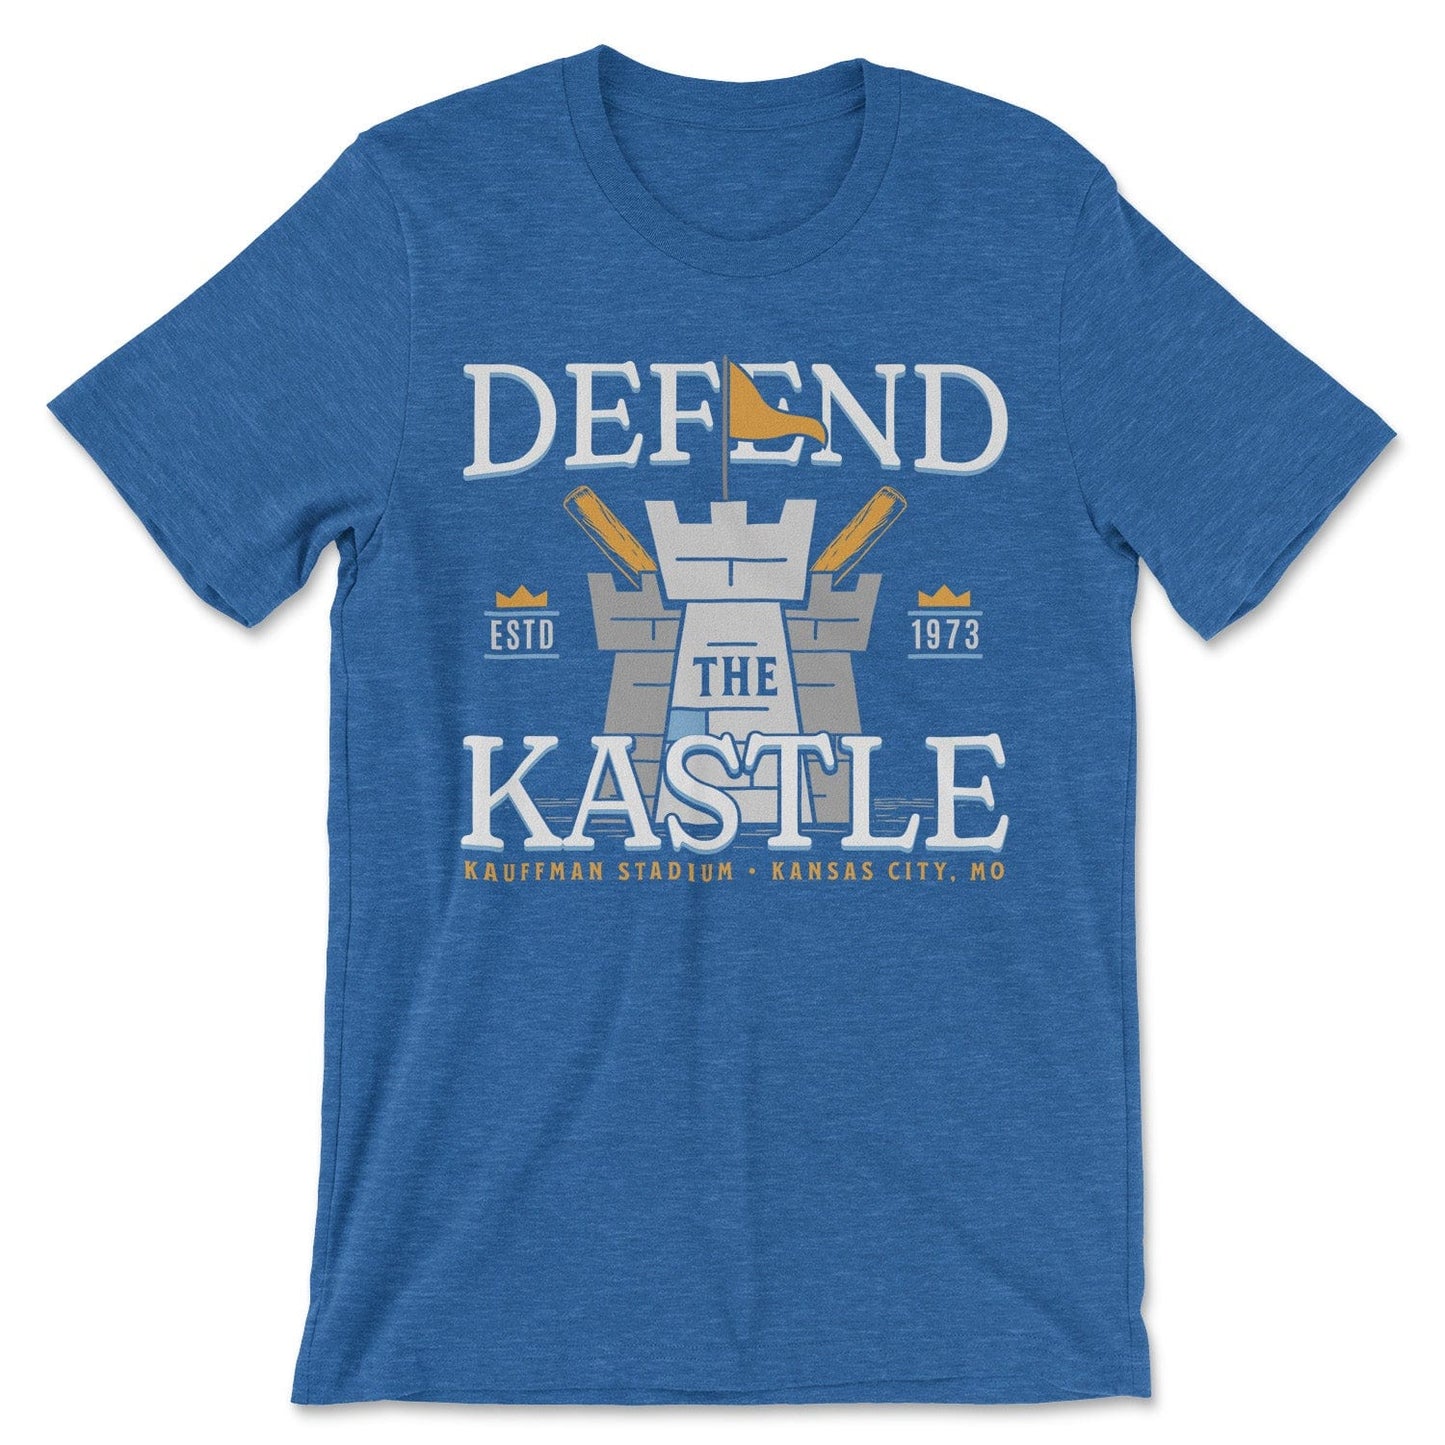 KC Swag Kansas City Royals powder, blue, gold DEFEND THE KASTLE on heather royal blue unisex t-shirt 